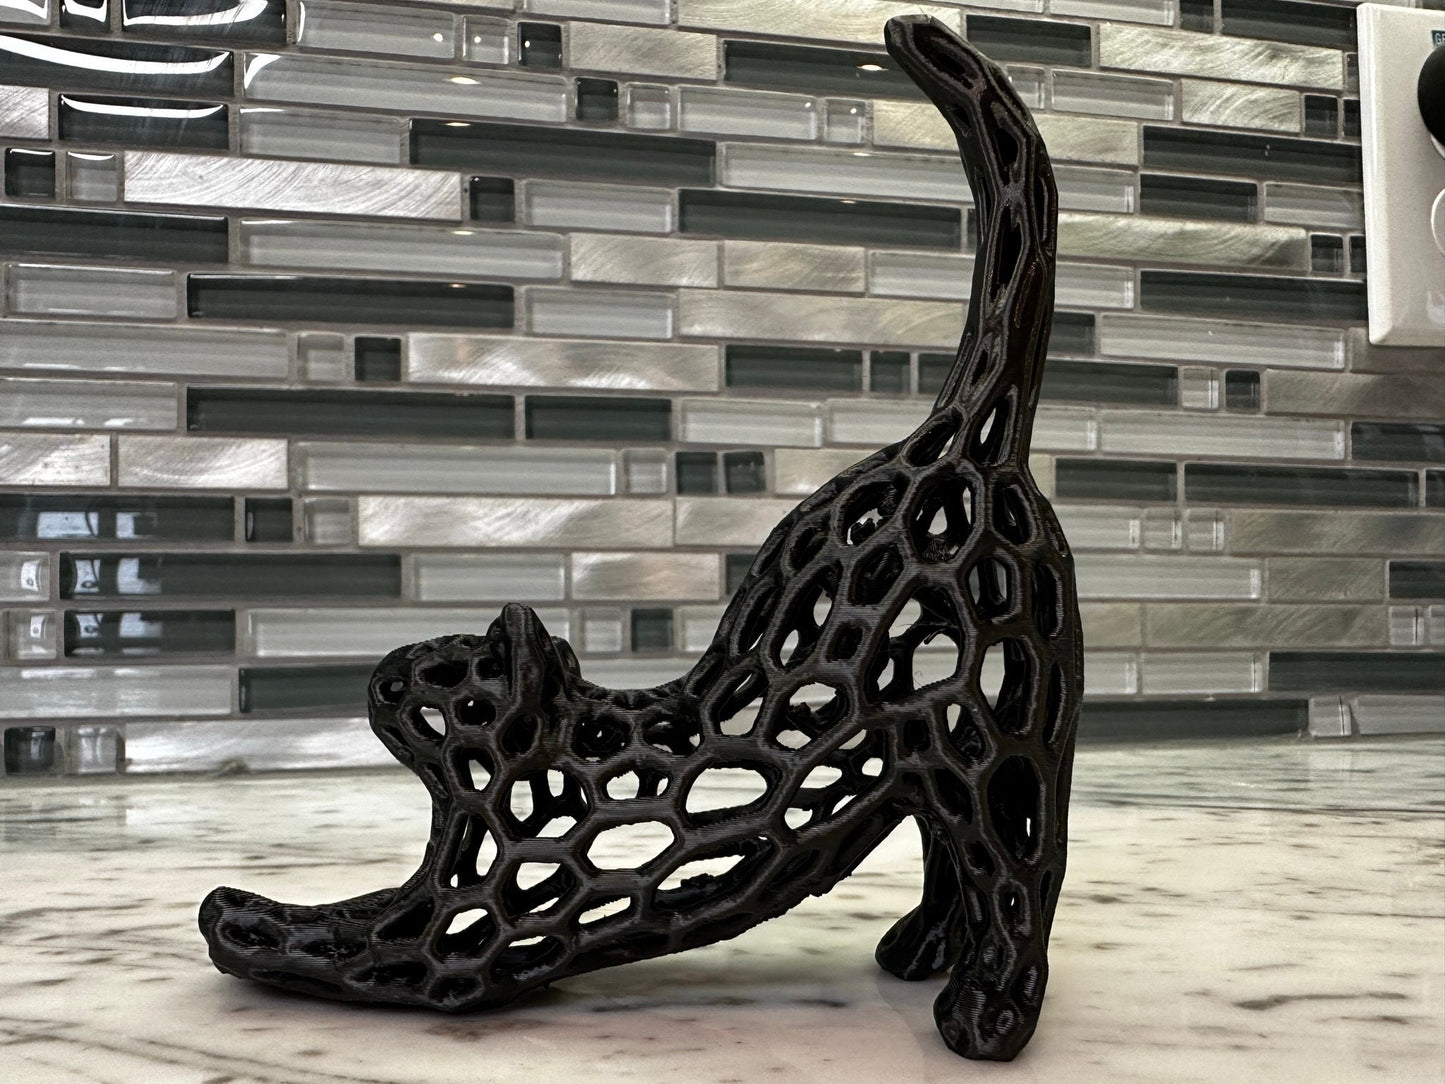 Cat Stretch Voronoi Figurine - 3D Printed Sculpture in Multiple Colors